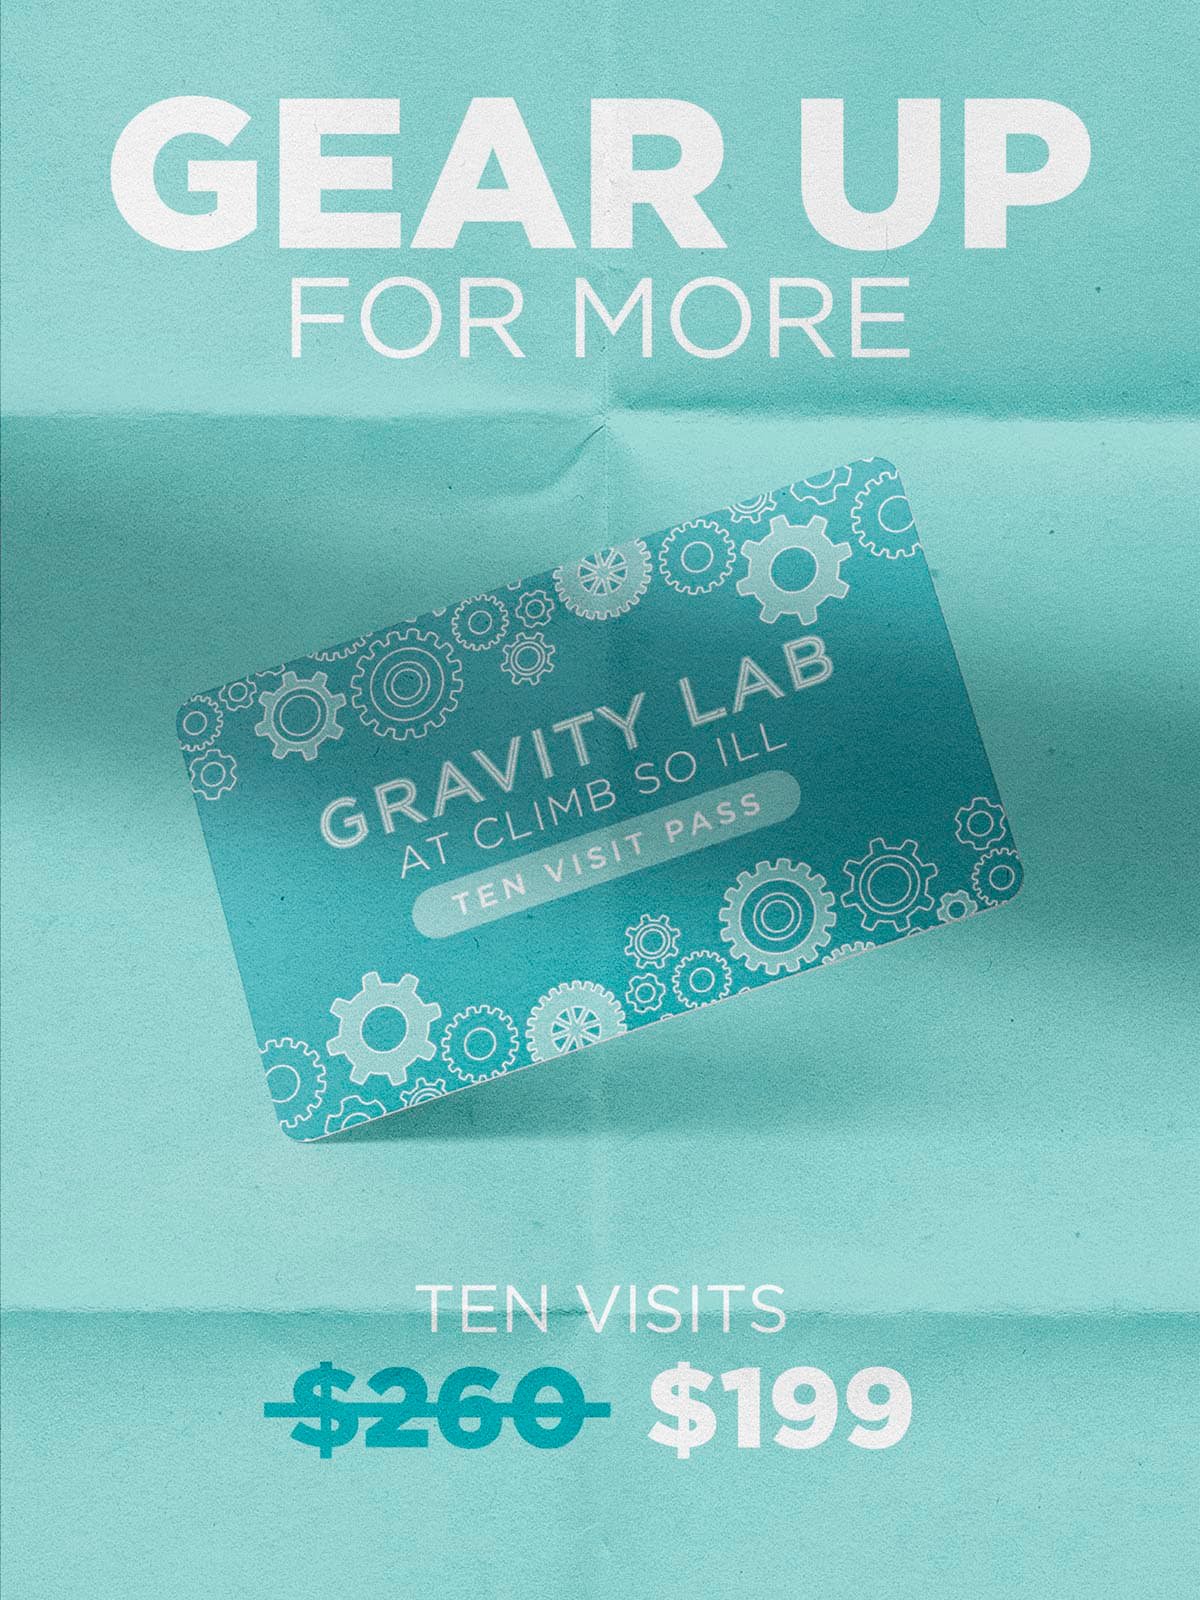 Climb So iLL Gravity Lab pass poster.